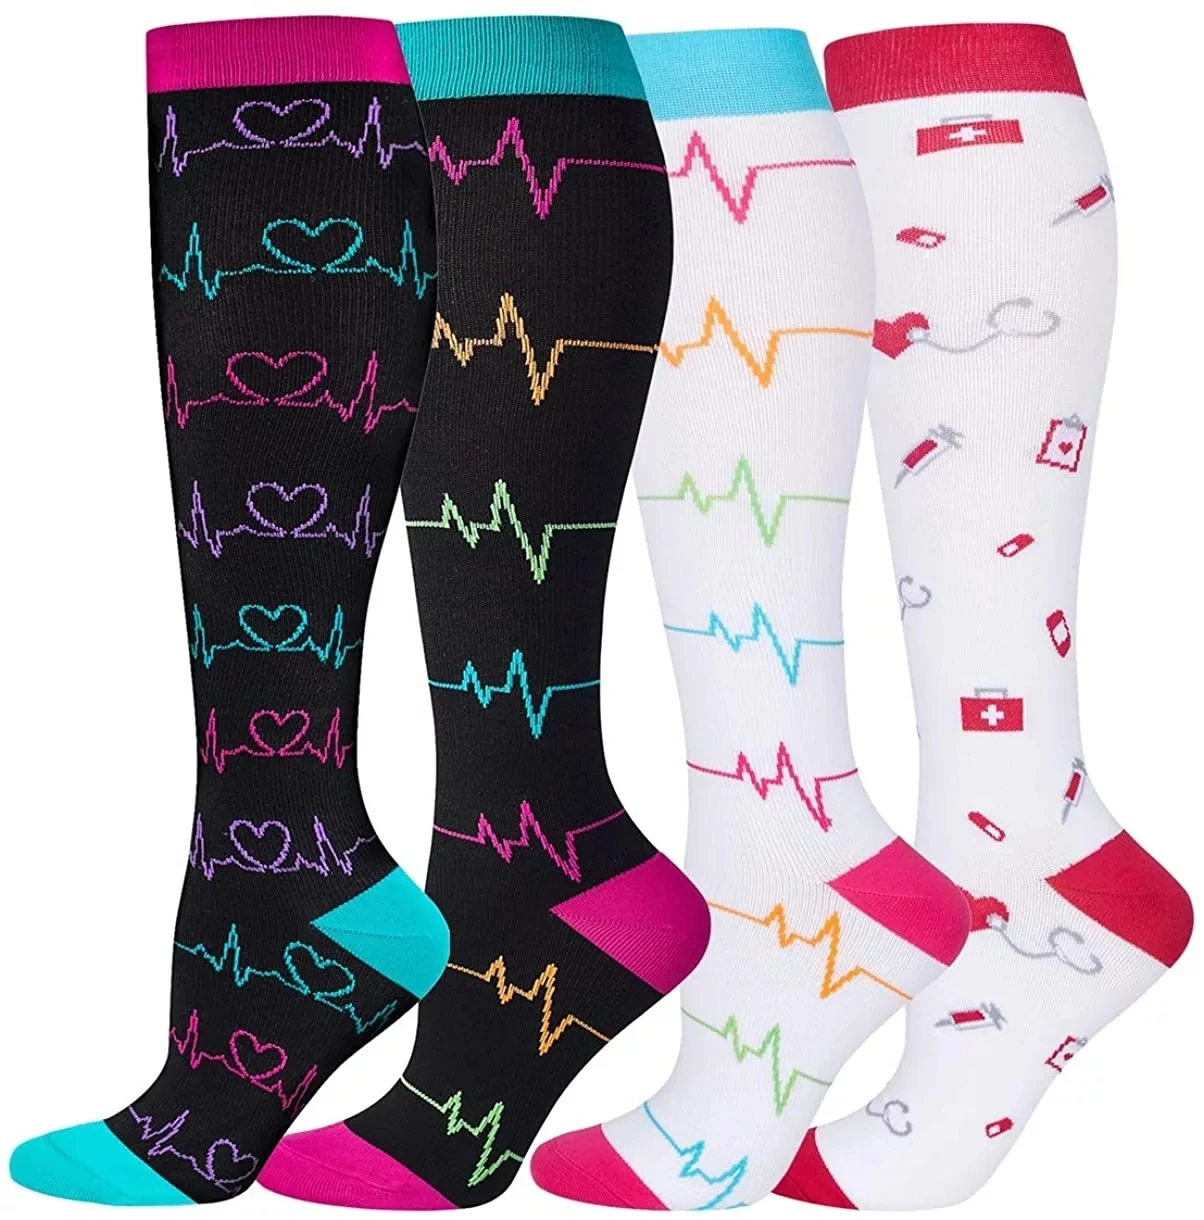 

58 Styles Compression Socks Fit For Medical Edema Diabetes Varicose Veins Socks Outdoor Men Women Running Hiking Sports Socks